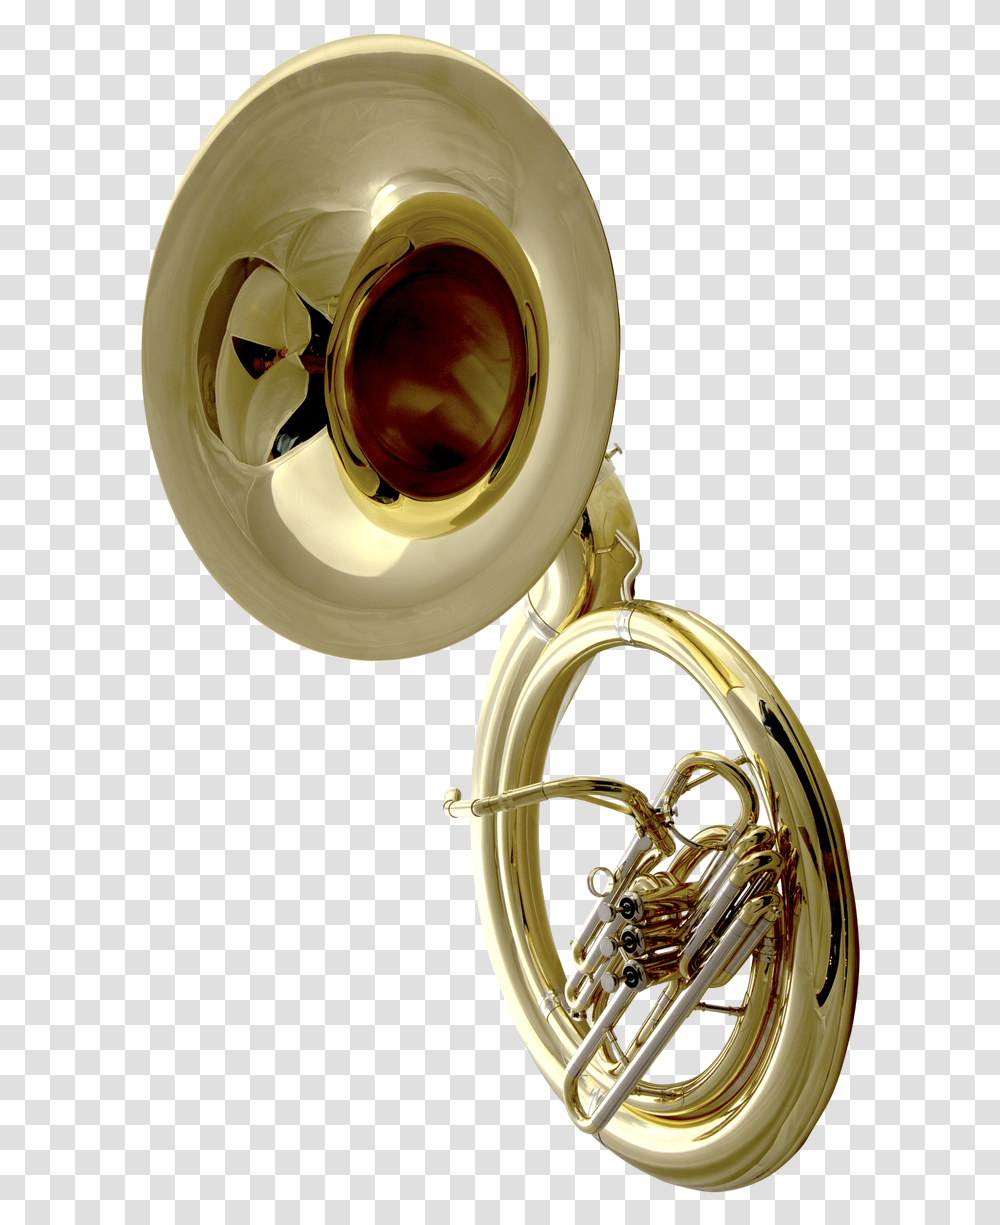 Sousaphone Music Instrument Download John Packer Sousaphone, Horn, Brass Section, Musical Instrument, French Horn Transparent Png